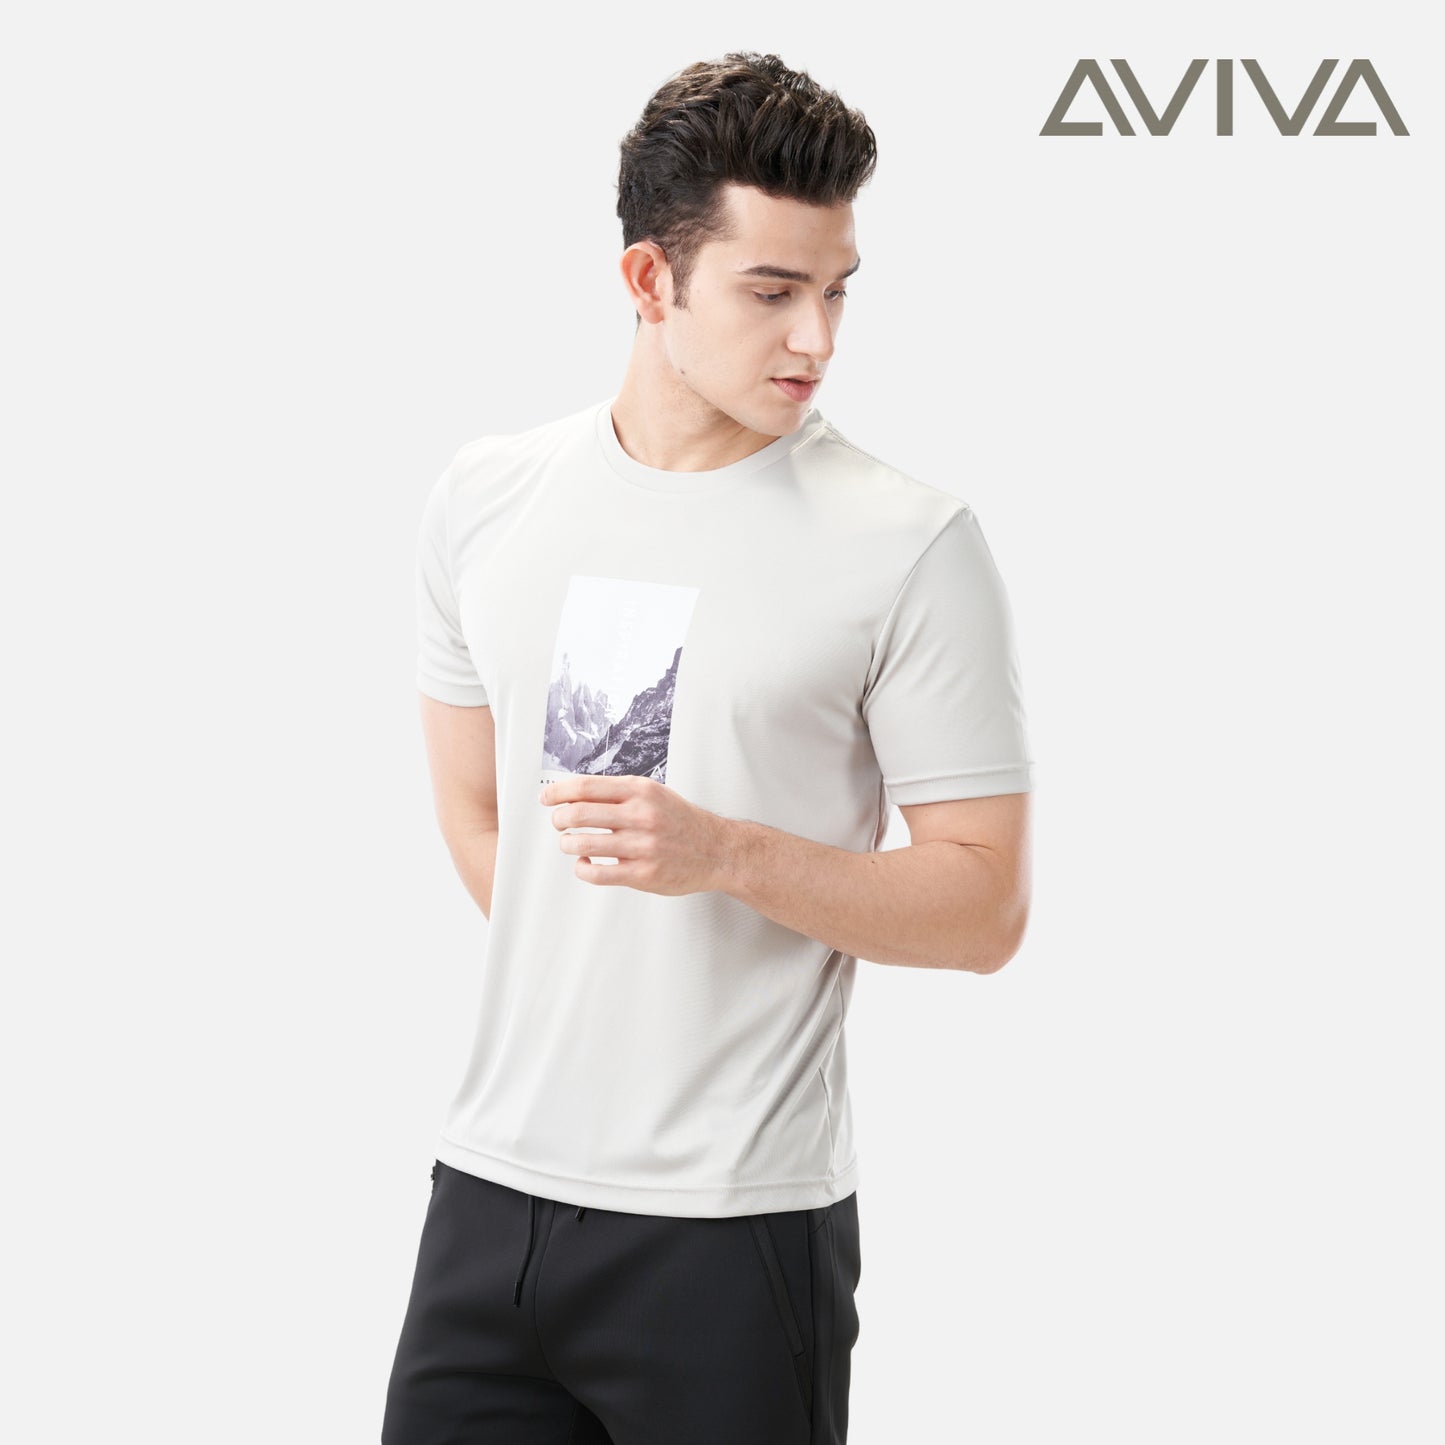 AVIVA Men's Graphic Short Sleeve Tee (91-8047)